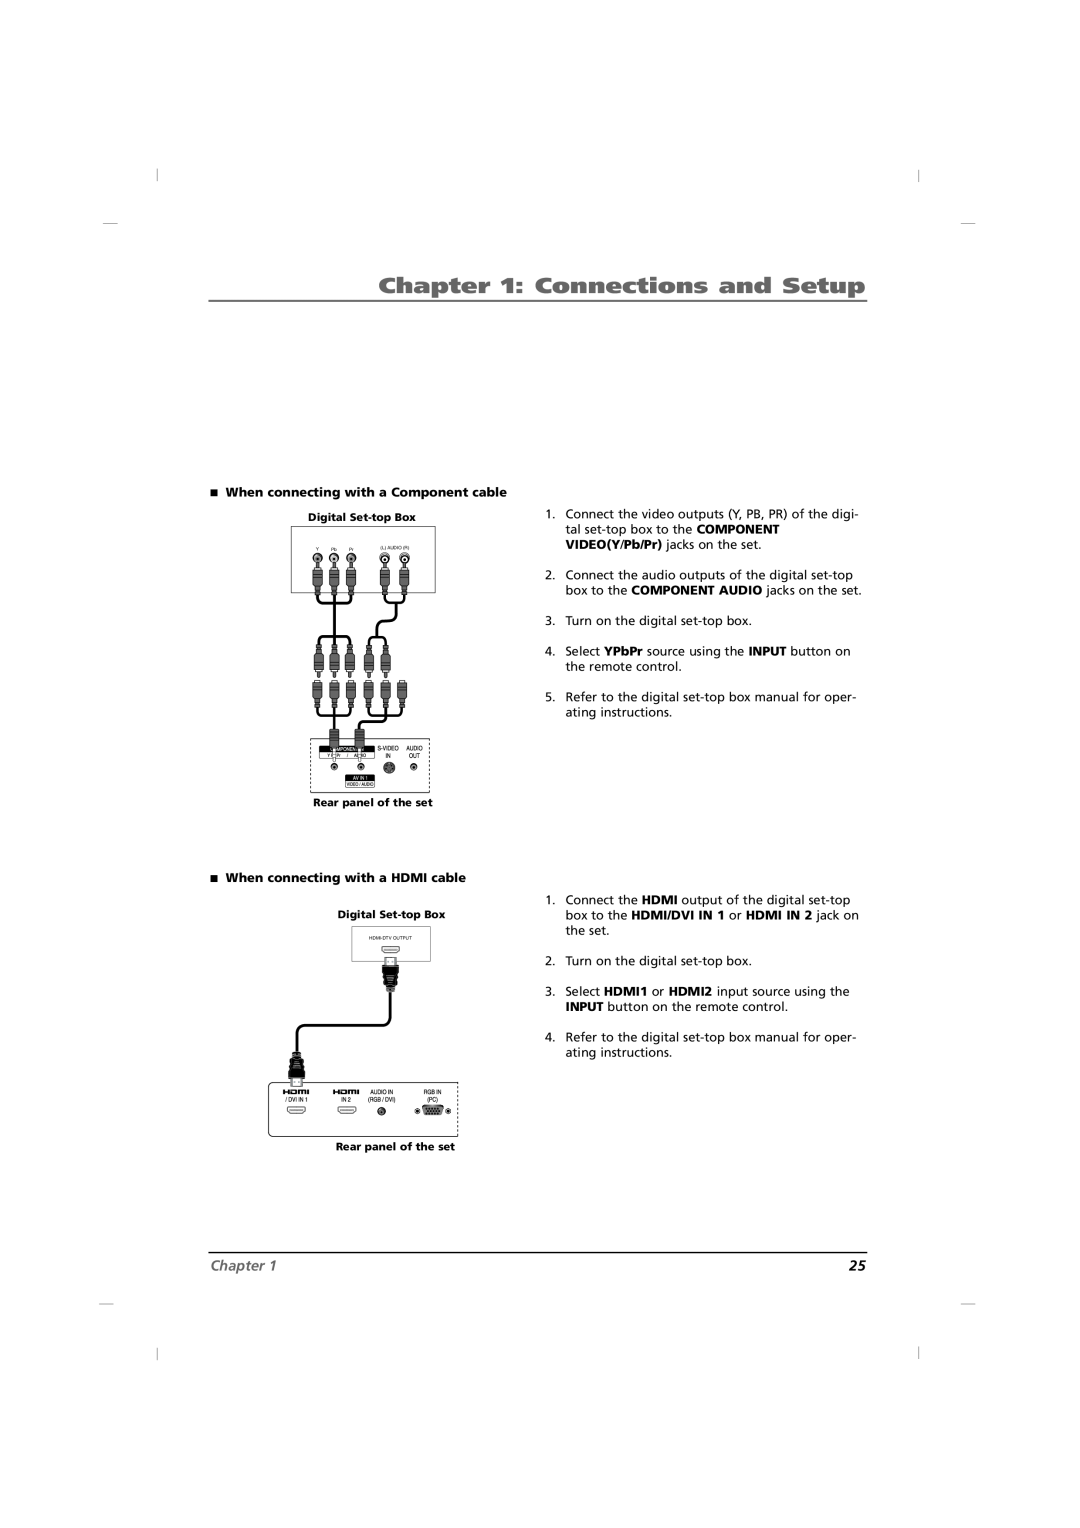 RCA J42HE820, J32HE720, J26HE820 manual Connections and Setup, Chapter 